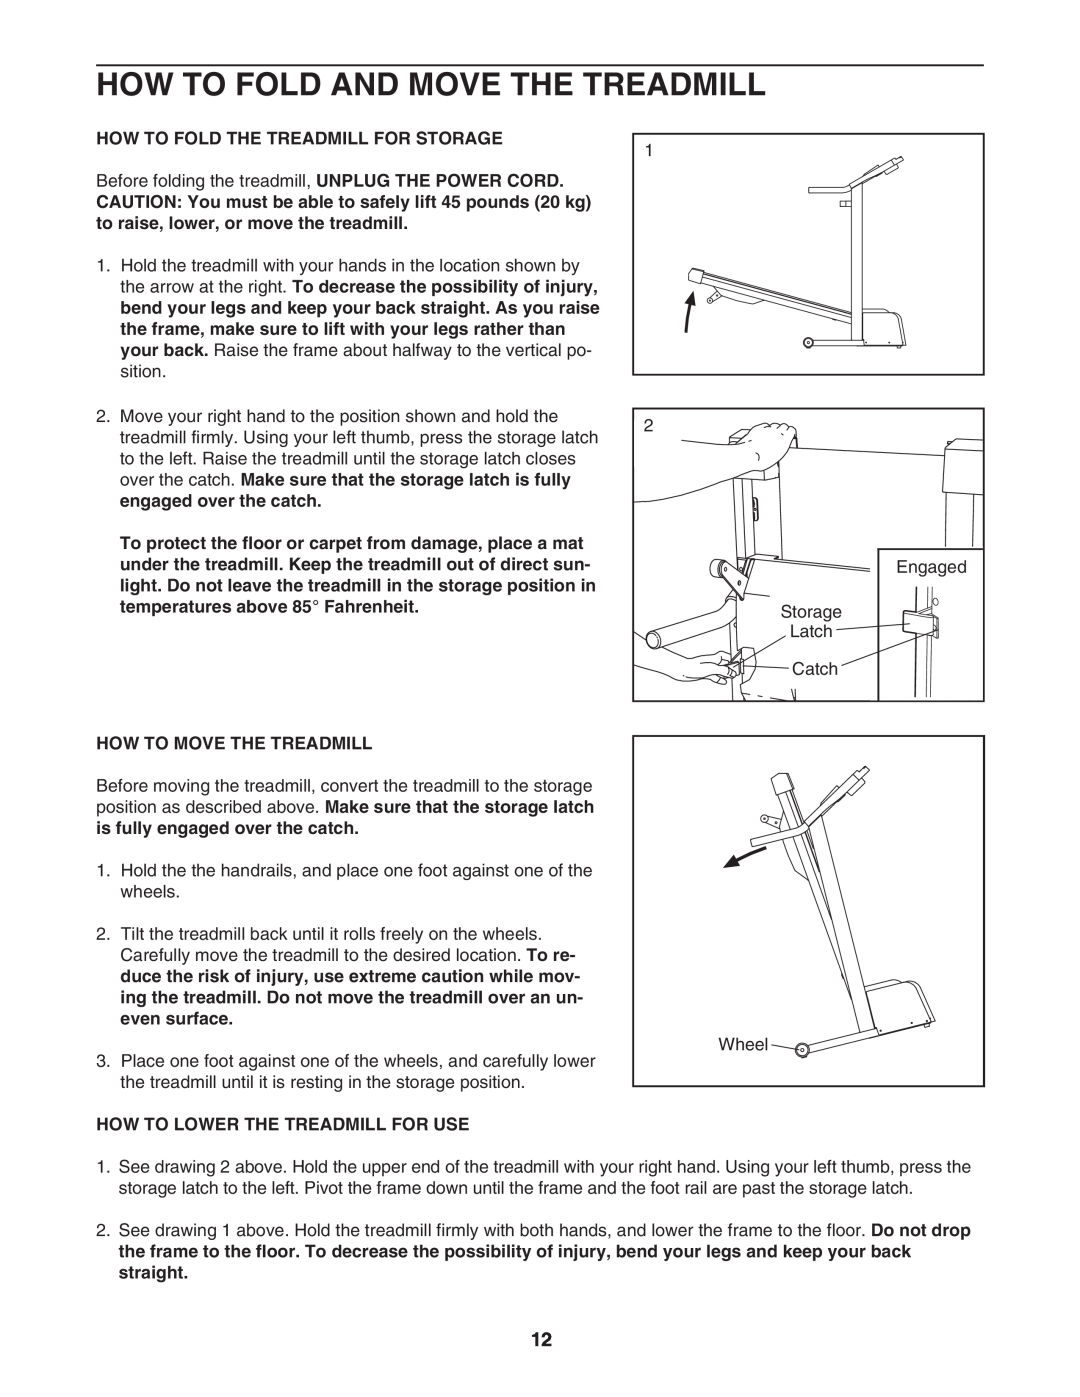 Image IMTL41205.0 How To Fold And Move The Treadmill, How To Fold The Treadmill For Storage, How To Move The Treadmill 